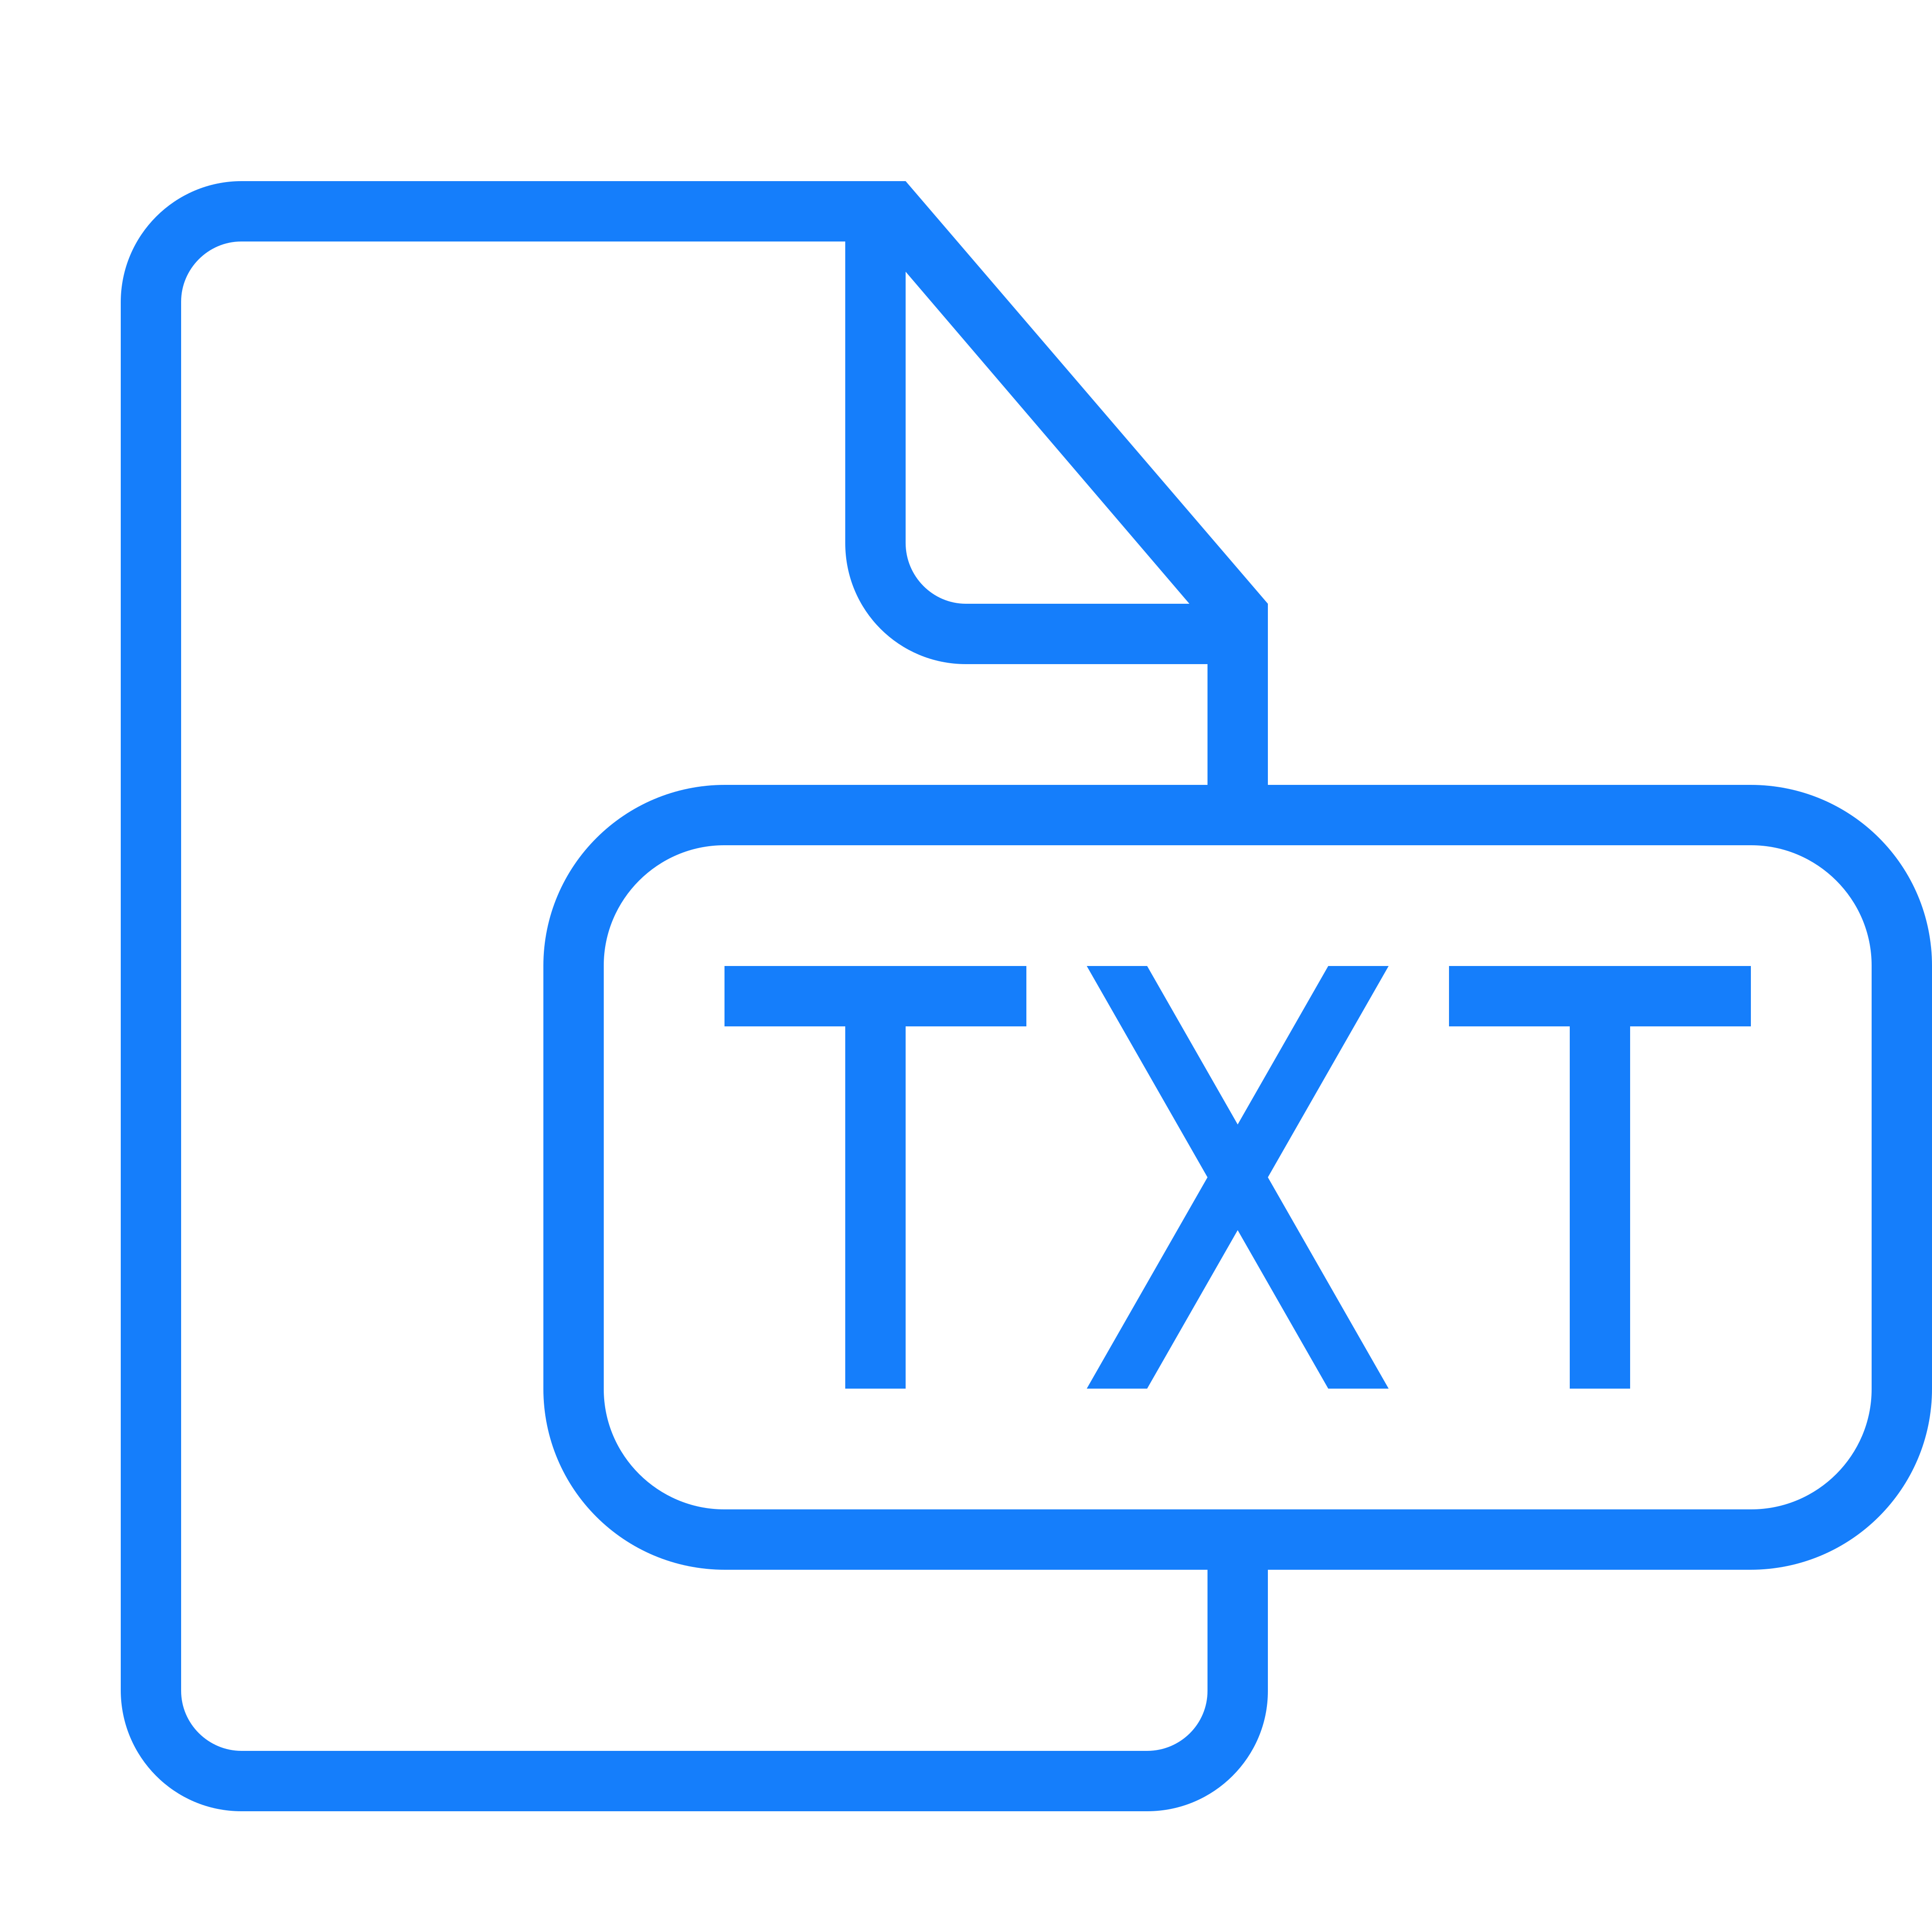 Иконка txt. Тхт символ. Txt Формат. Значок XML.